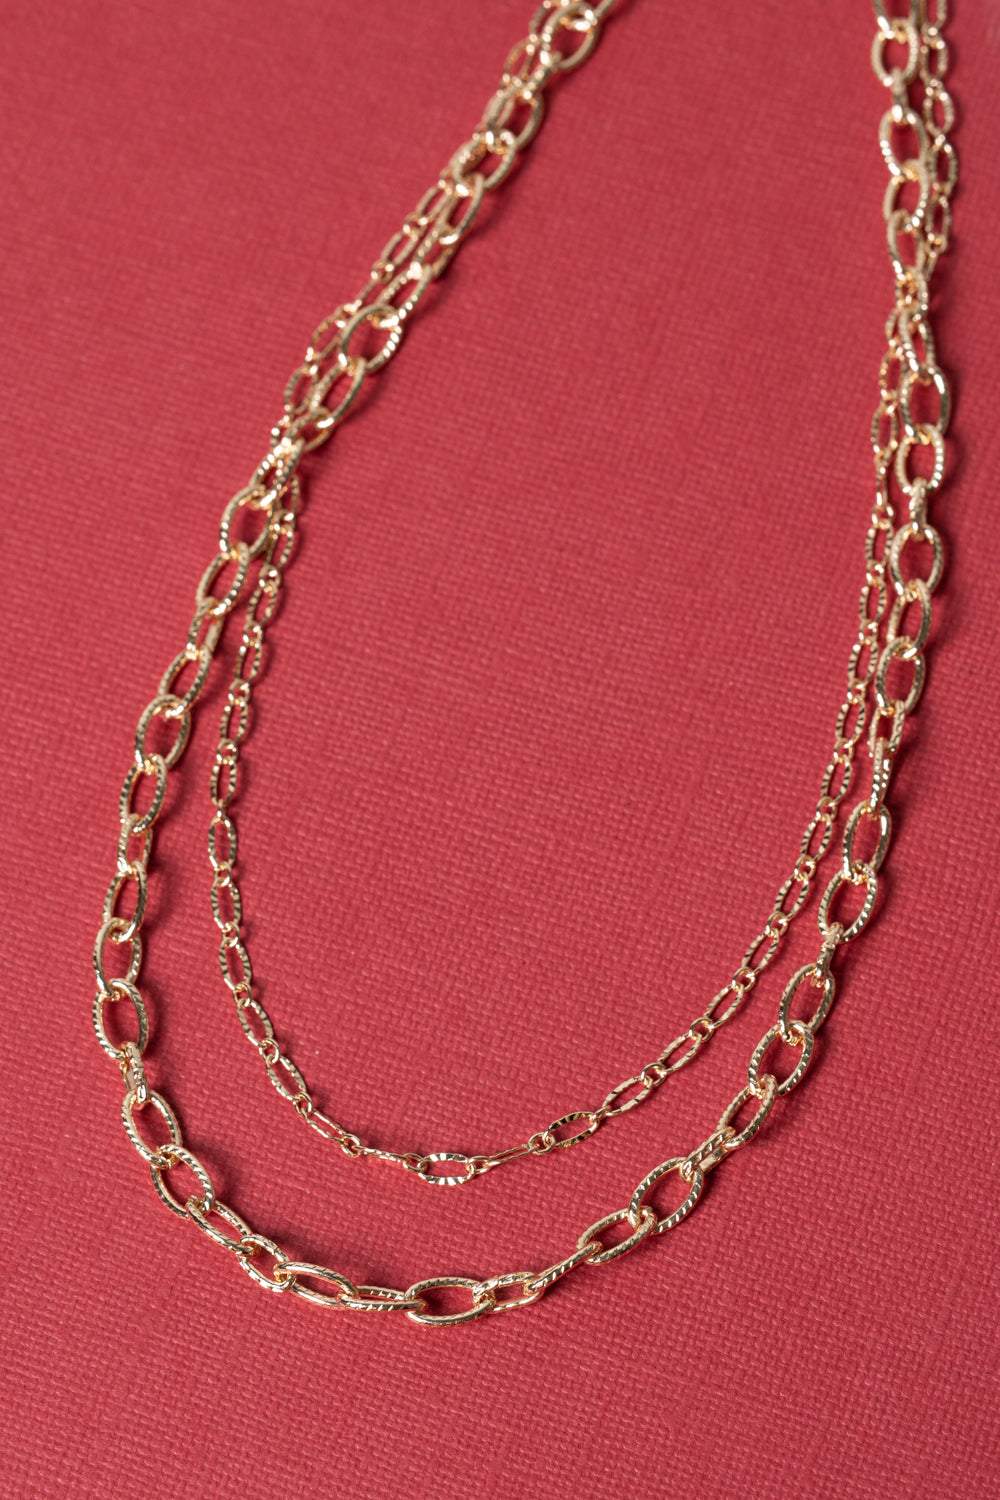 Type 3 Light Links Necklace